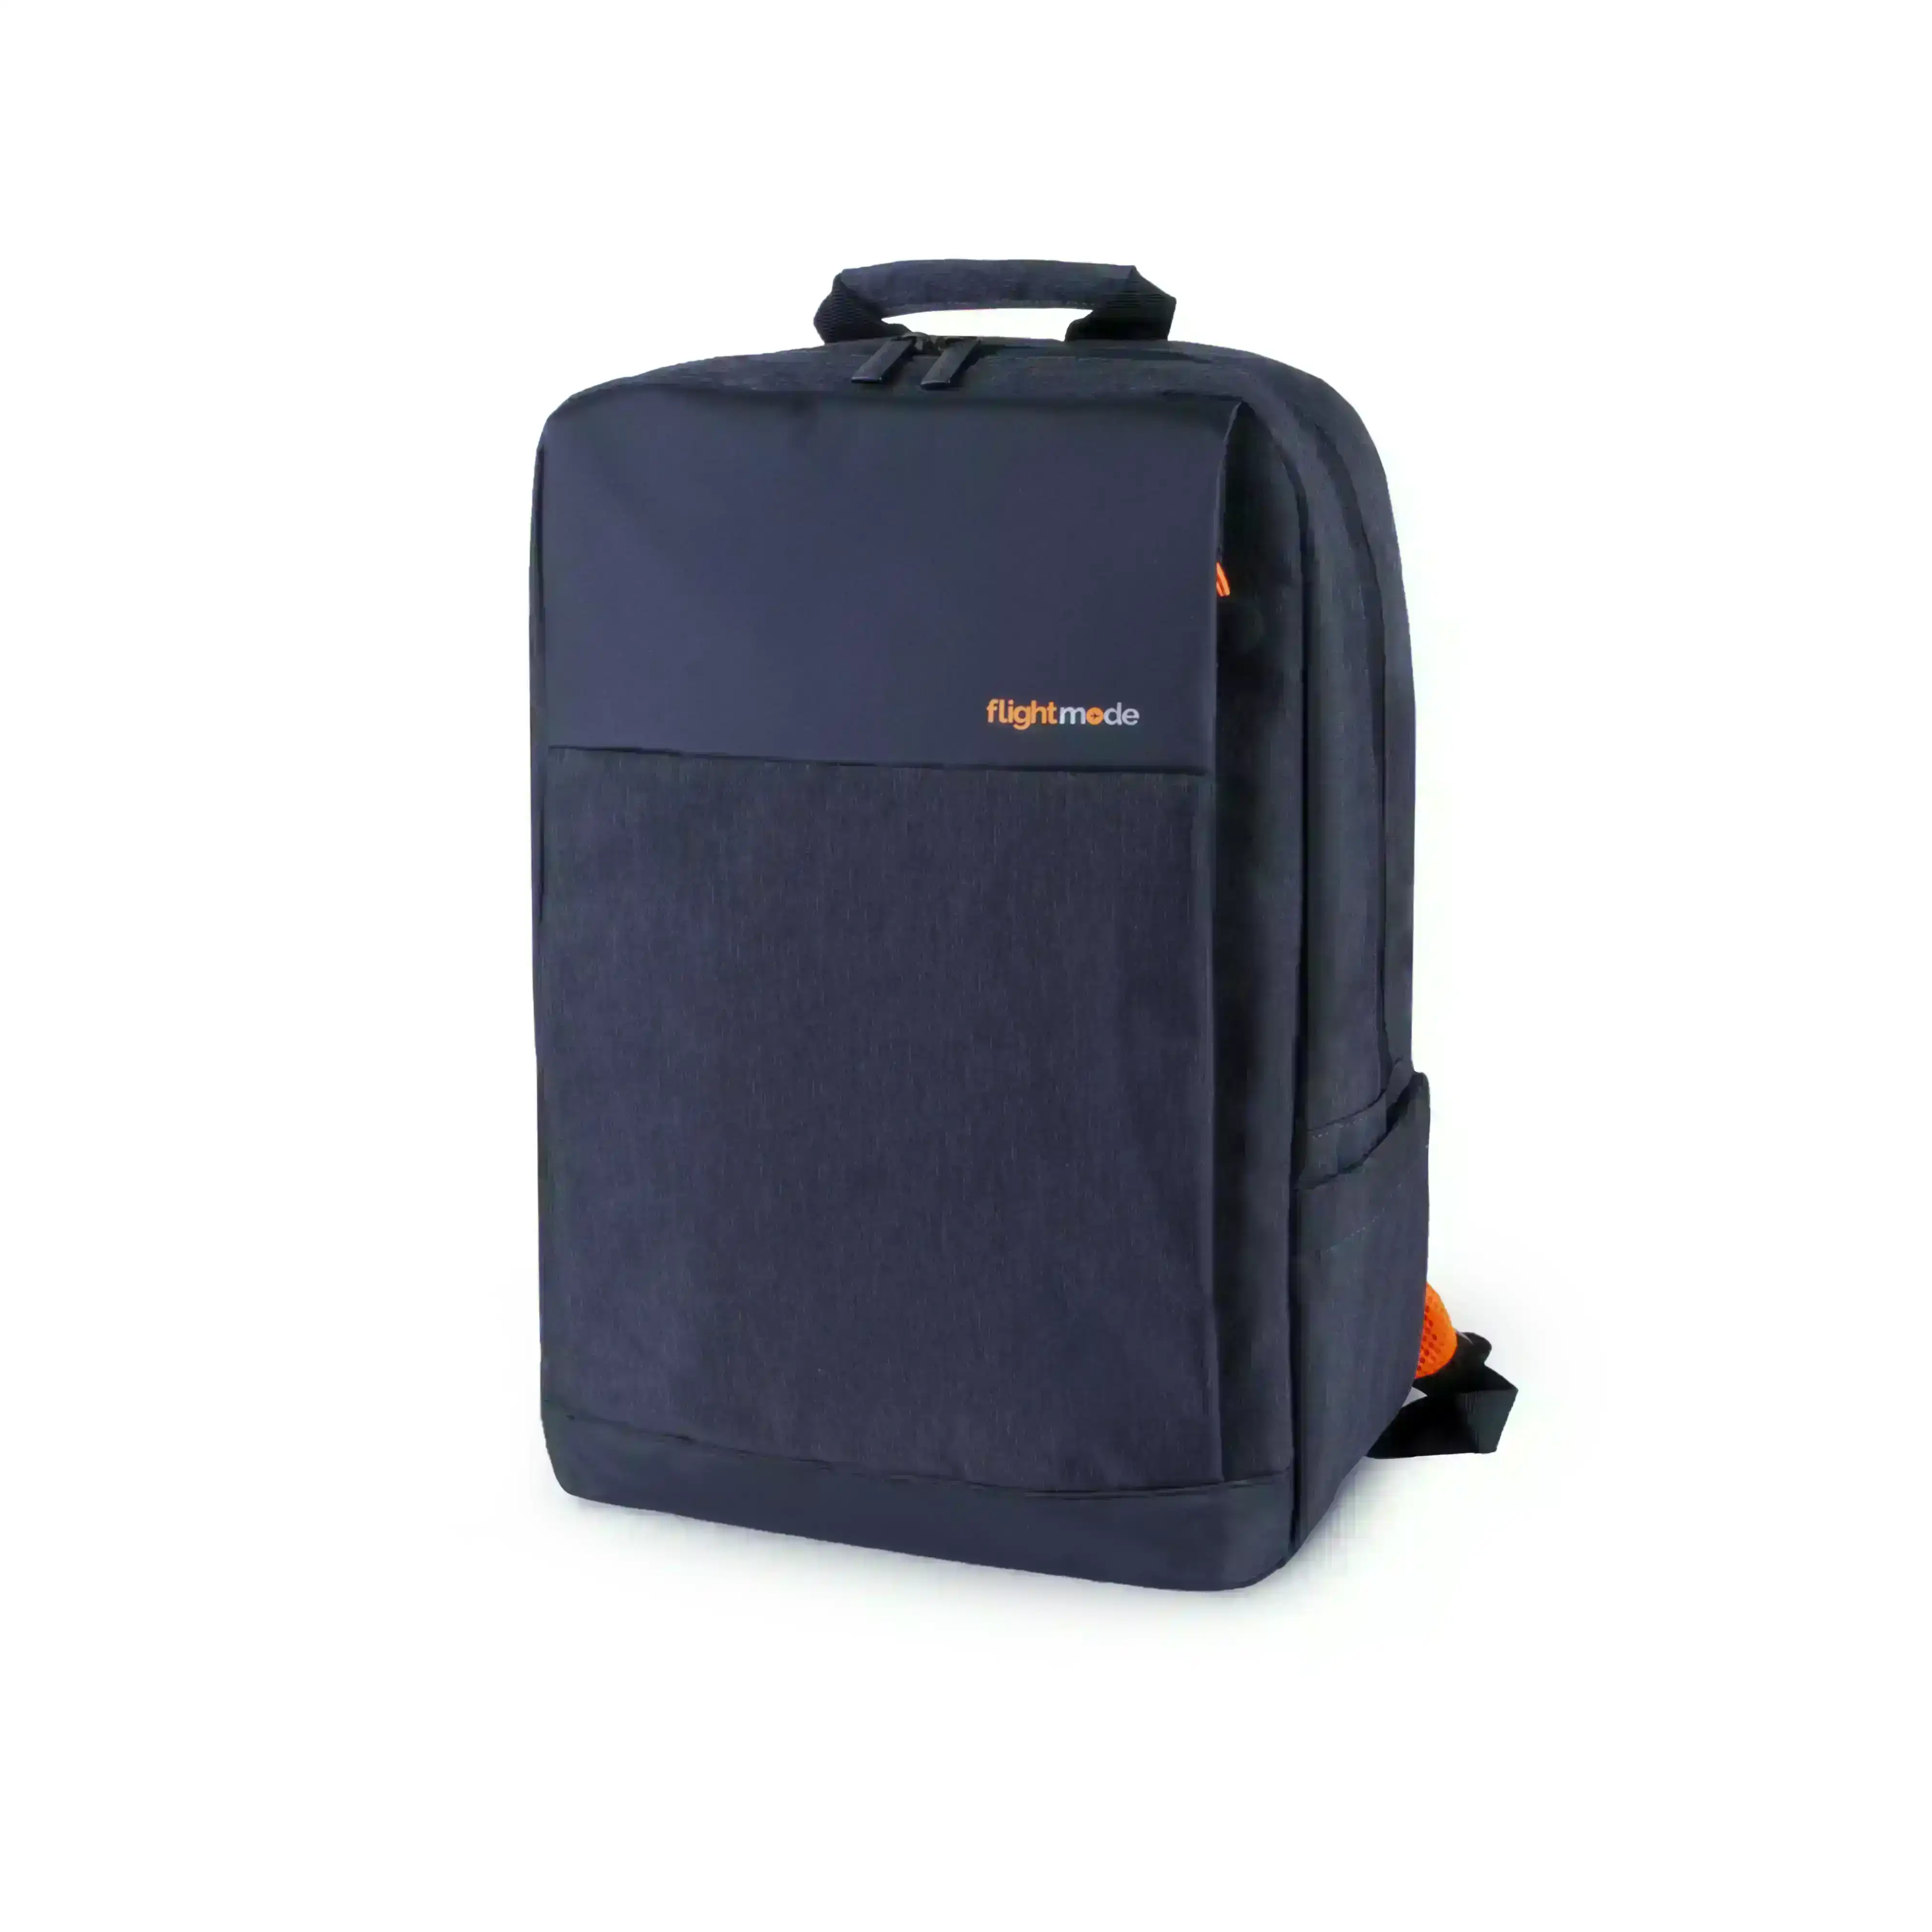 Flightmode Travel Backpack - Charcoal